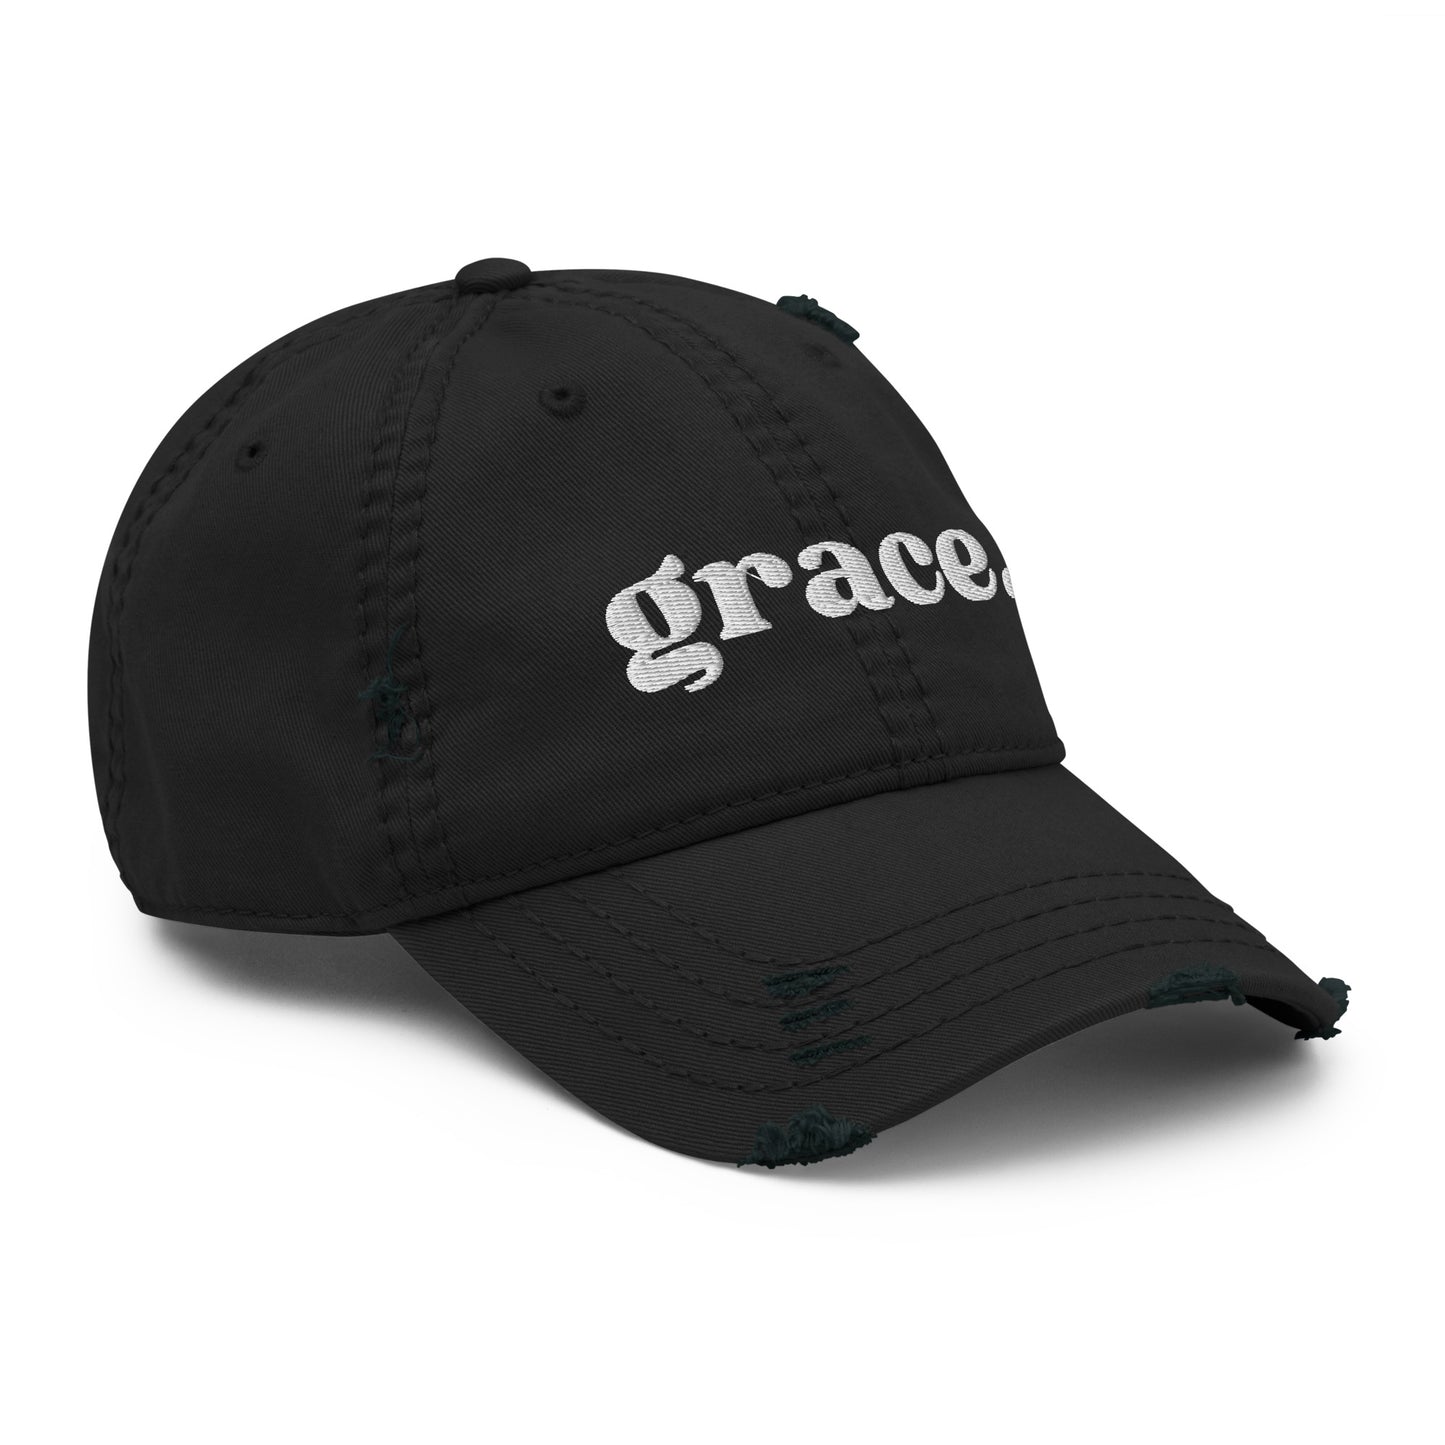 Grace Distressed Dad Hat - Black